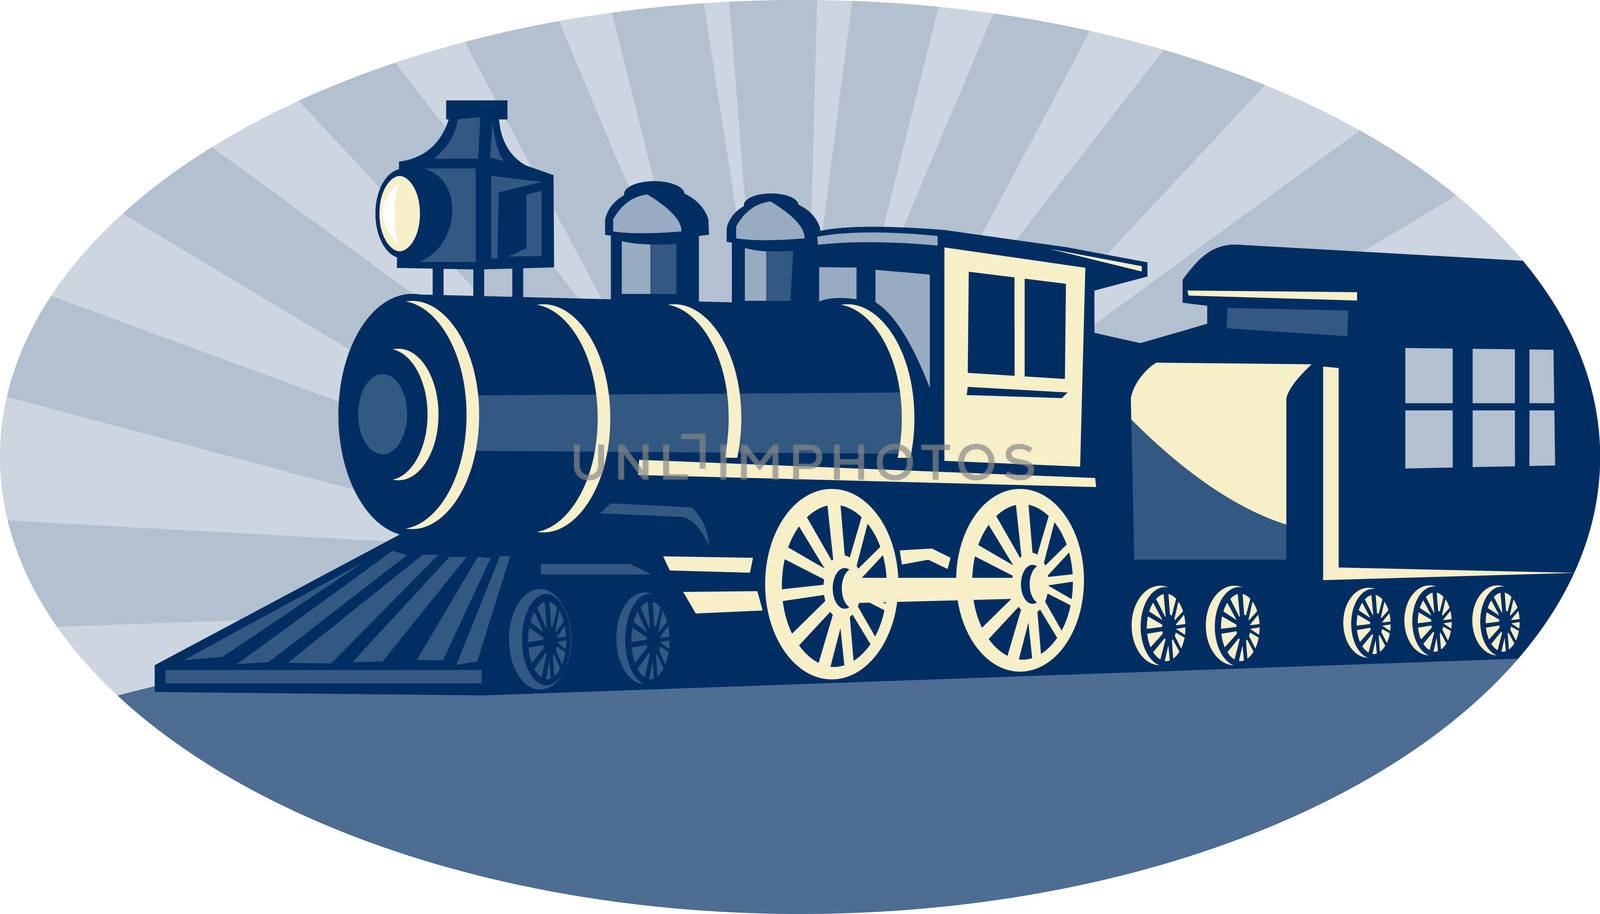 Steam train or locomotive by patrimonio